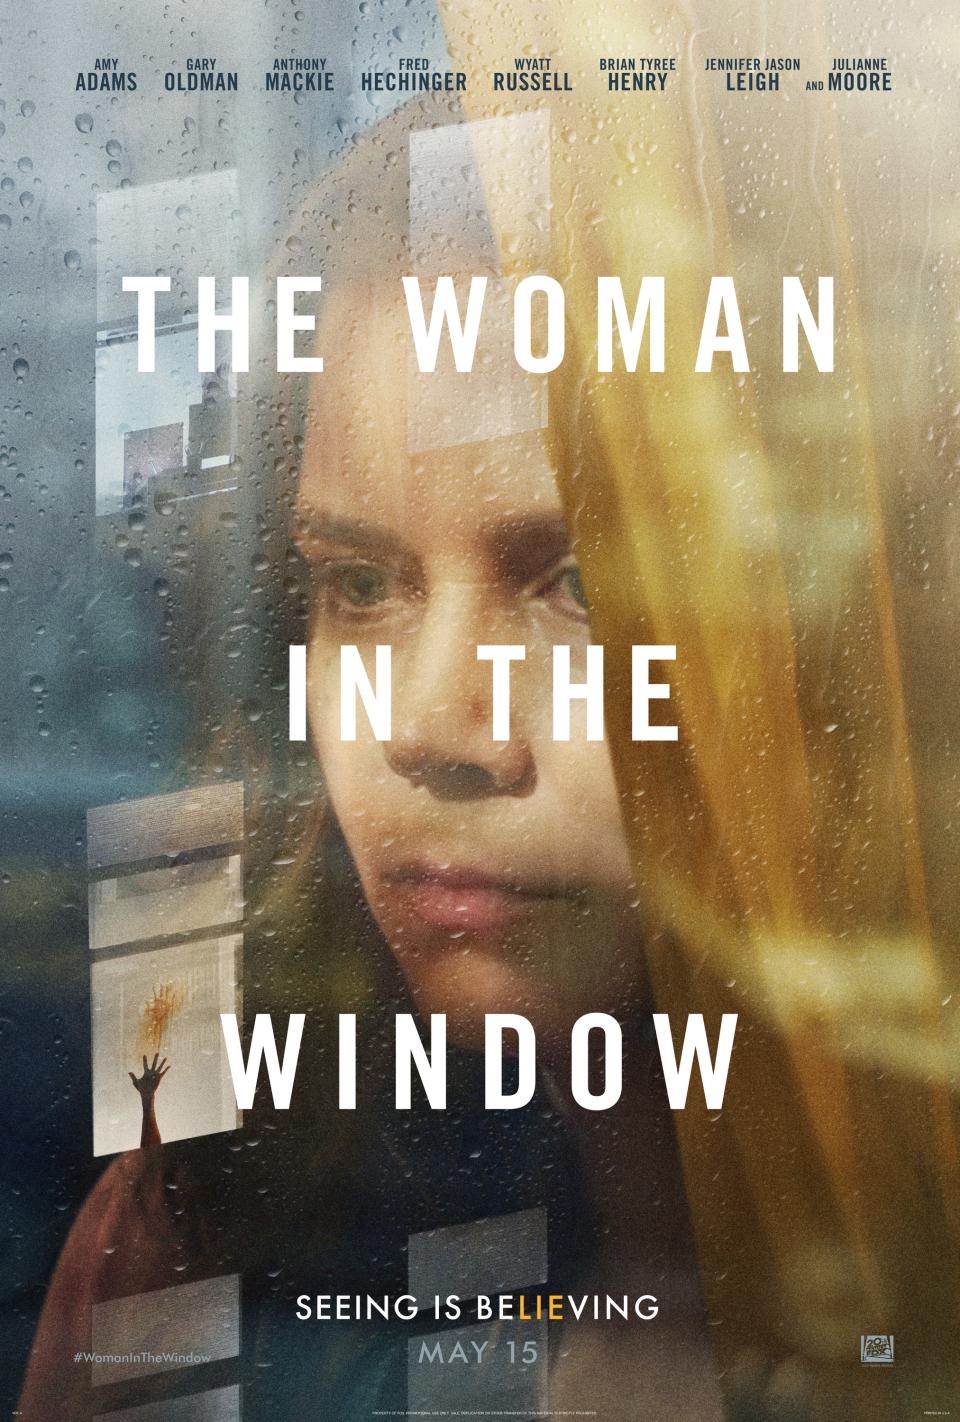 TBD: The Woman in the Window